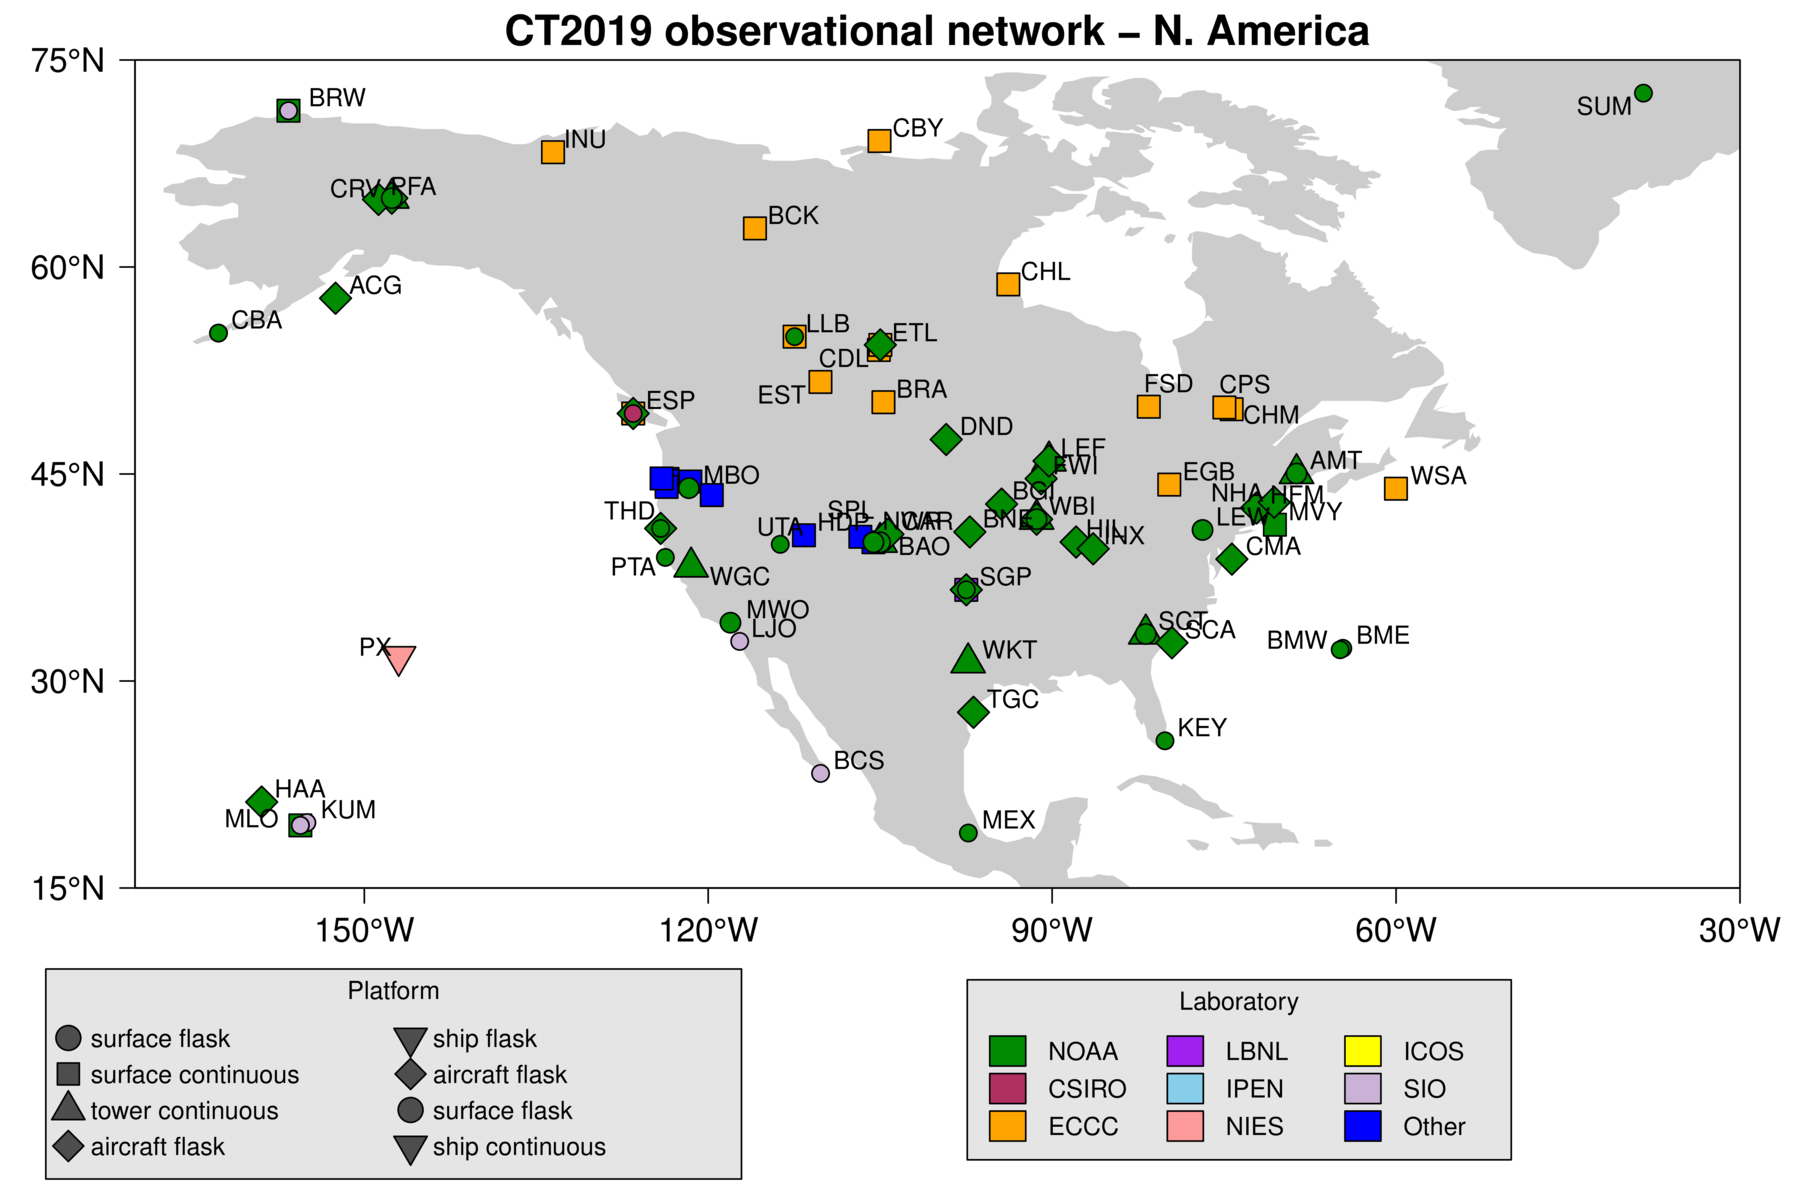 /webdata/ccgg/CT2019/summary/network-nam.png